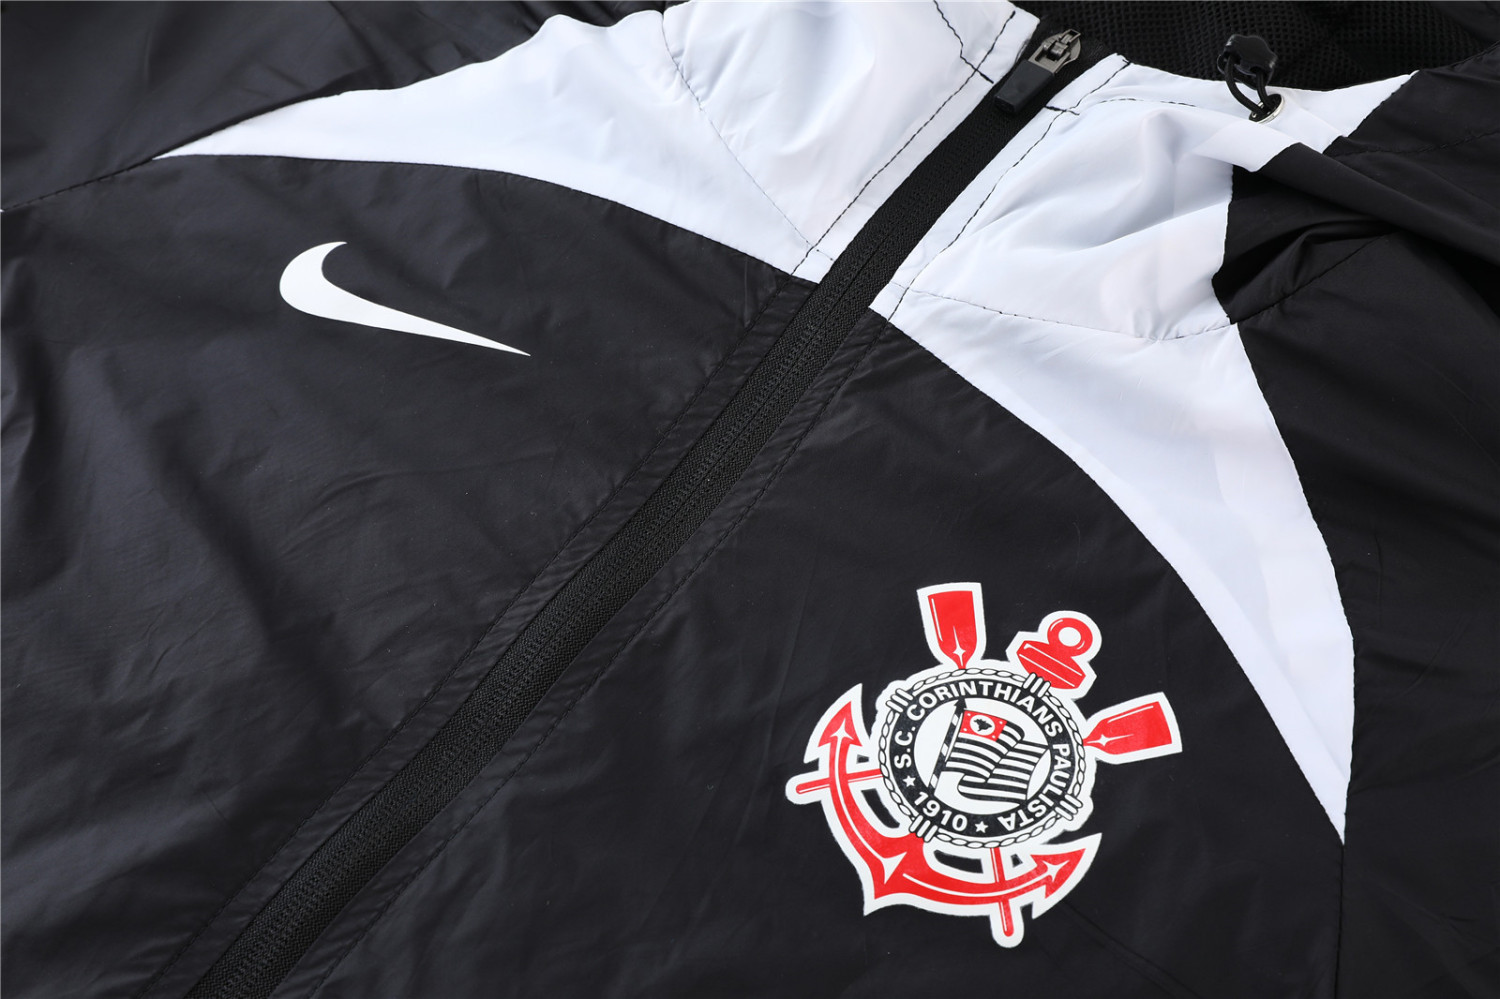 Corinthians All Weather Windrunner Soccer Jacket Black 2021/22 Men's (Hoodie)